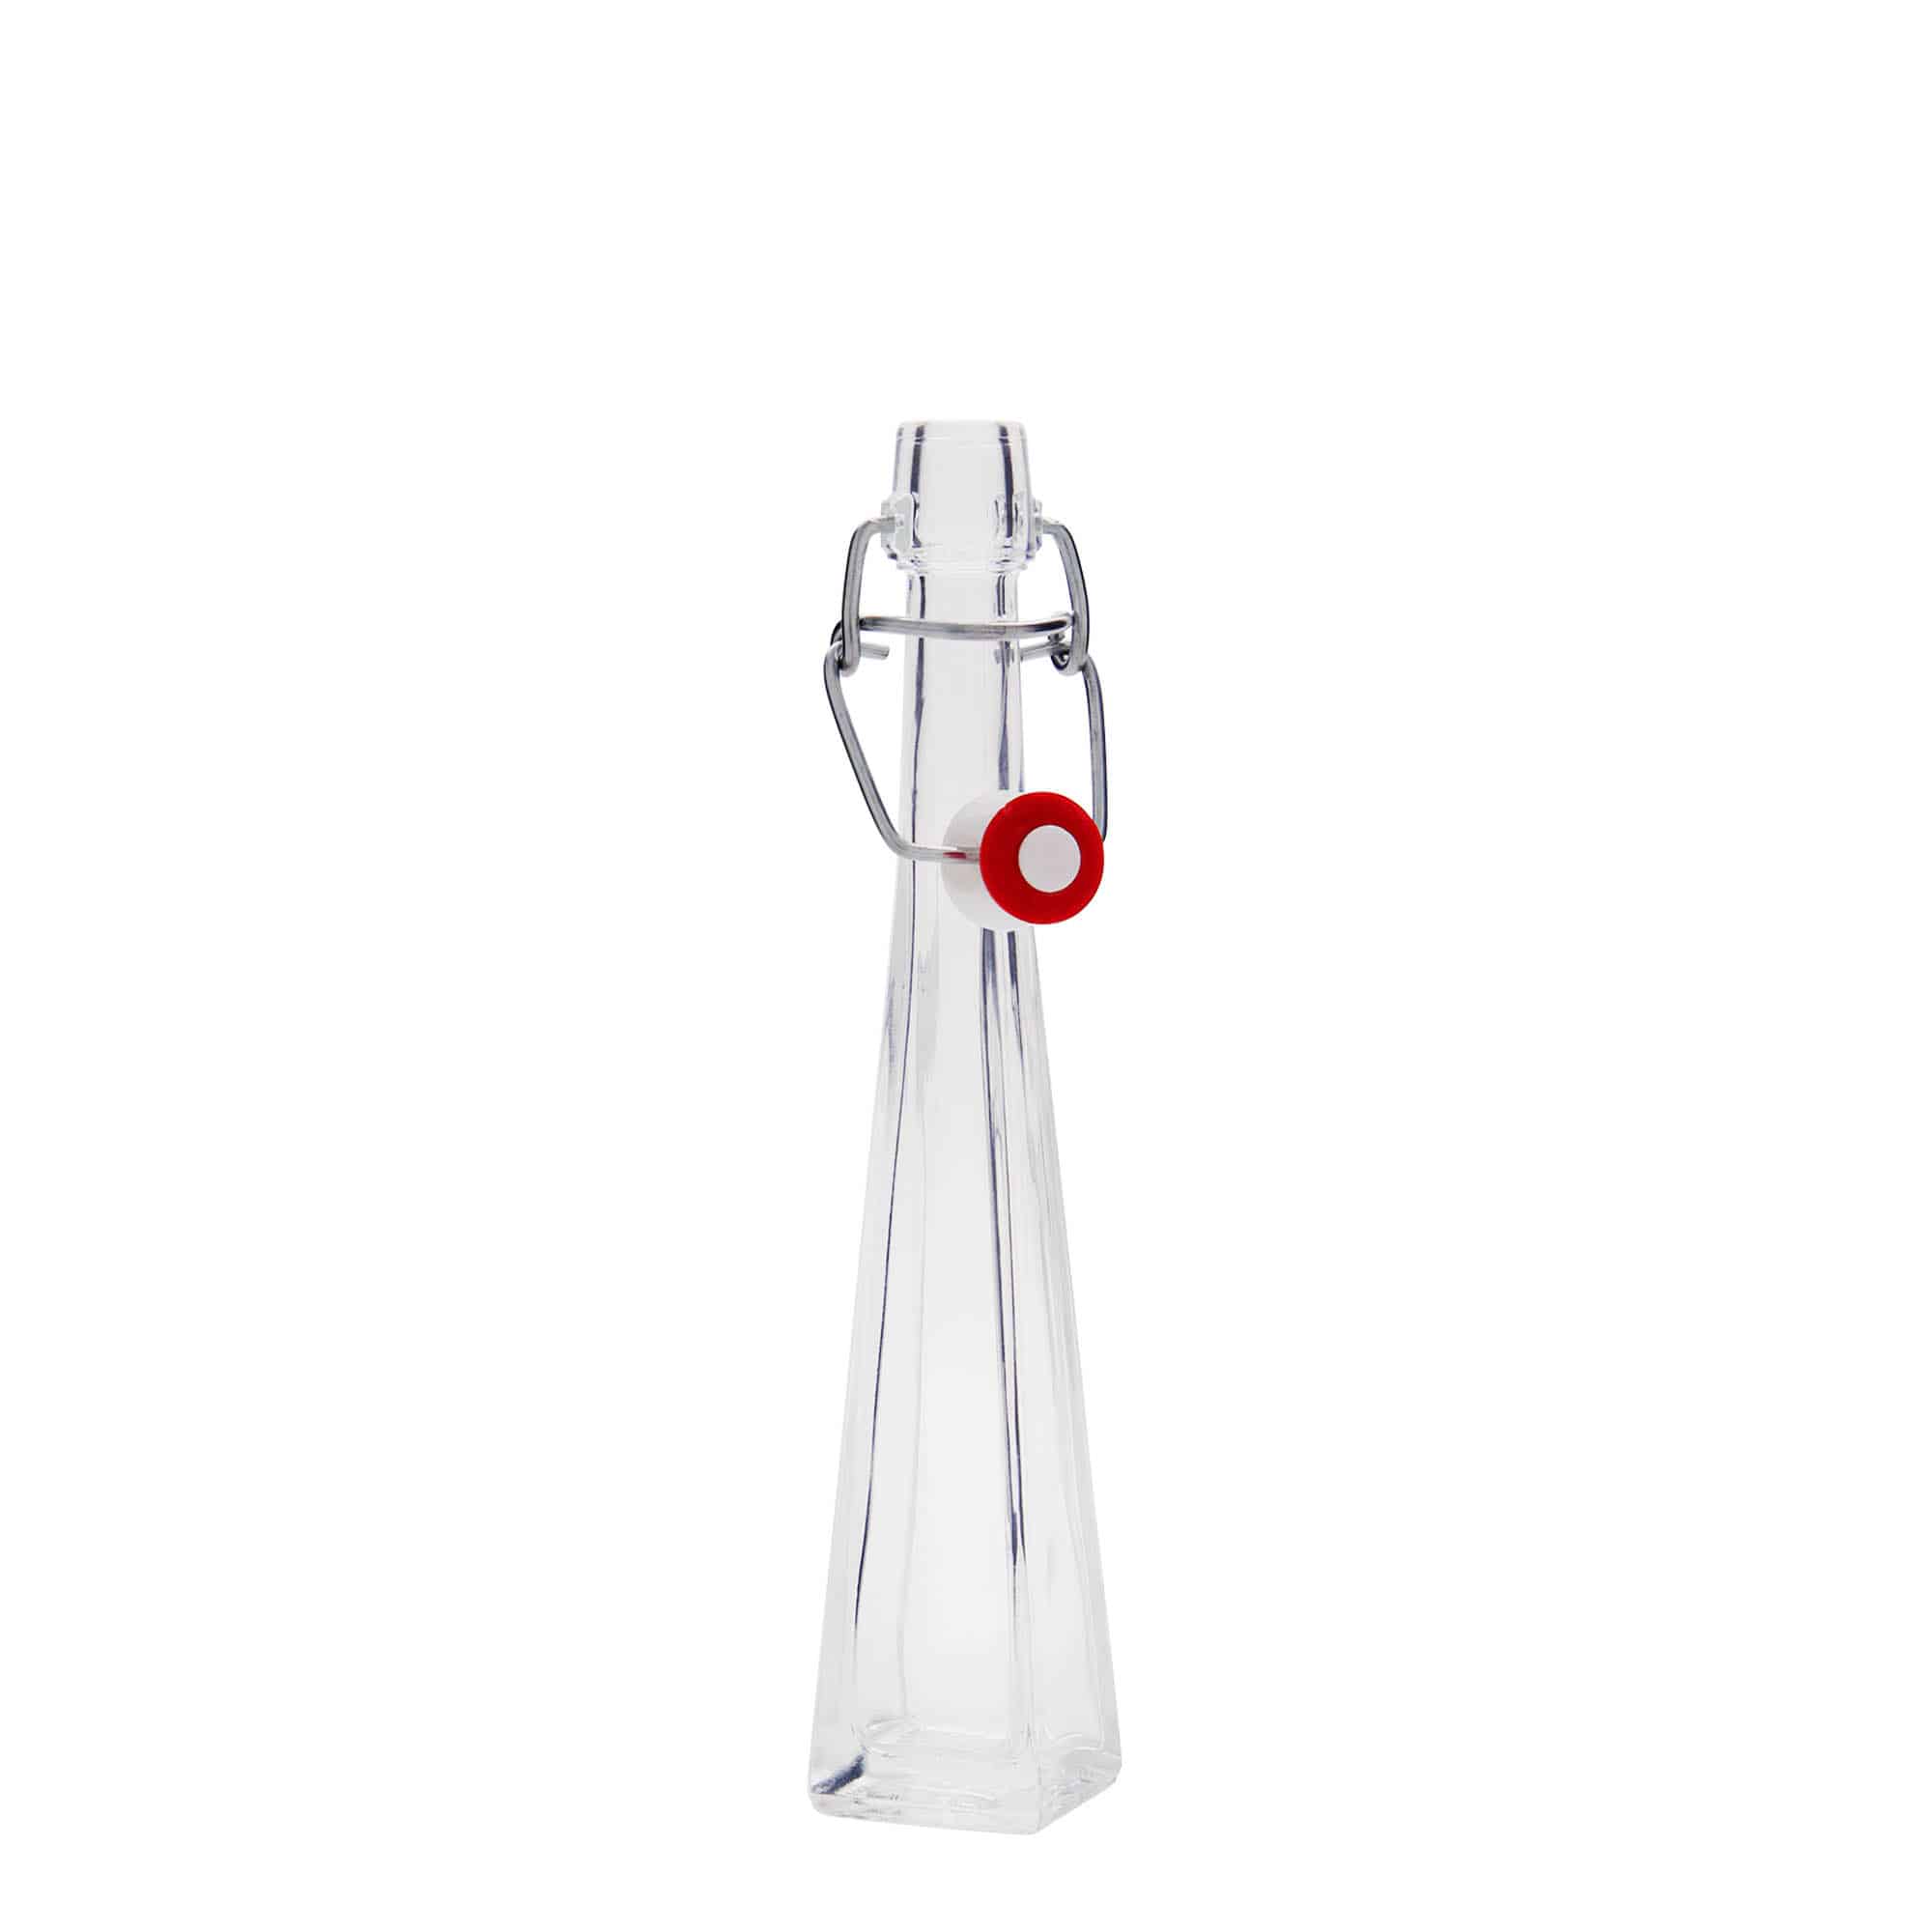 Botella de vidrio 'Dama Quadrato' de 40 ml, cuadrada, boca: tapón mecánico